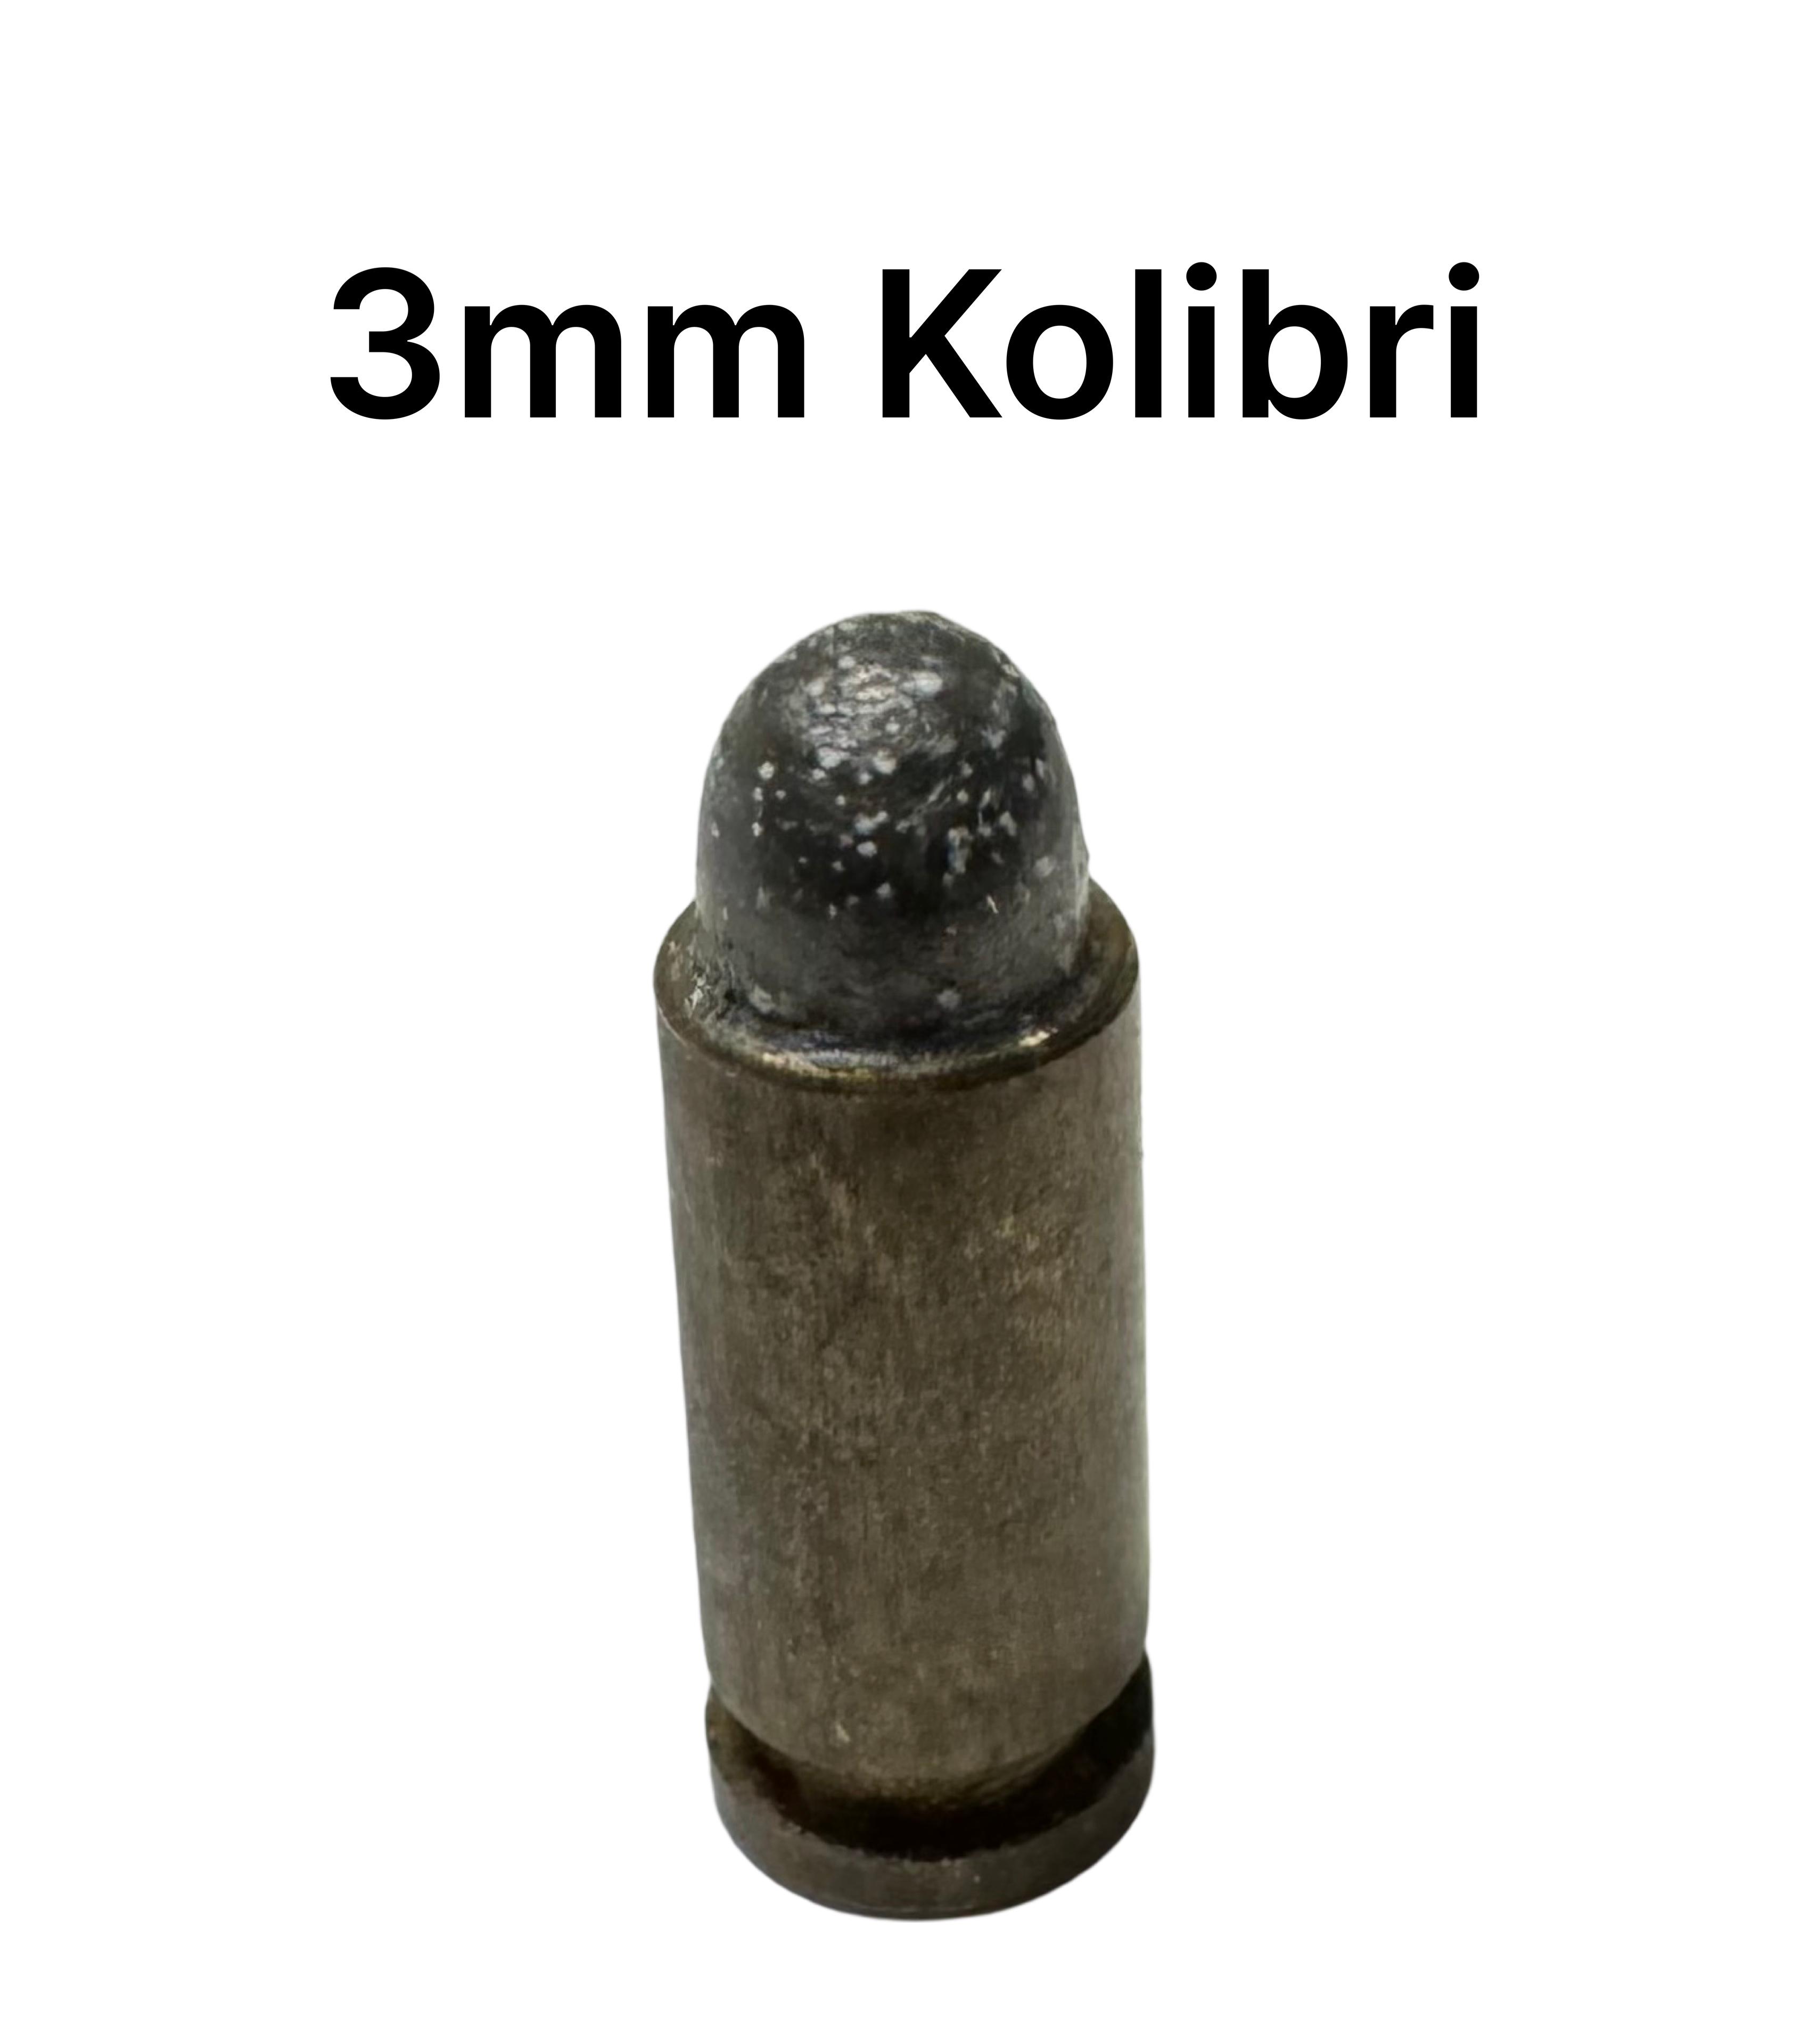 RARE 3mm Kolibri Auto Cartridge